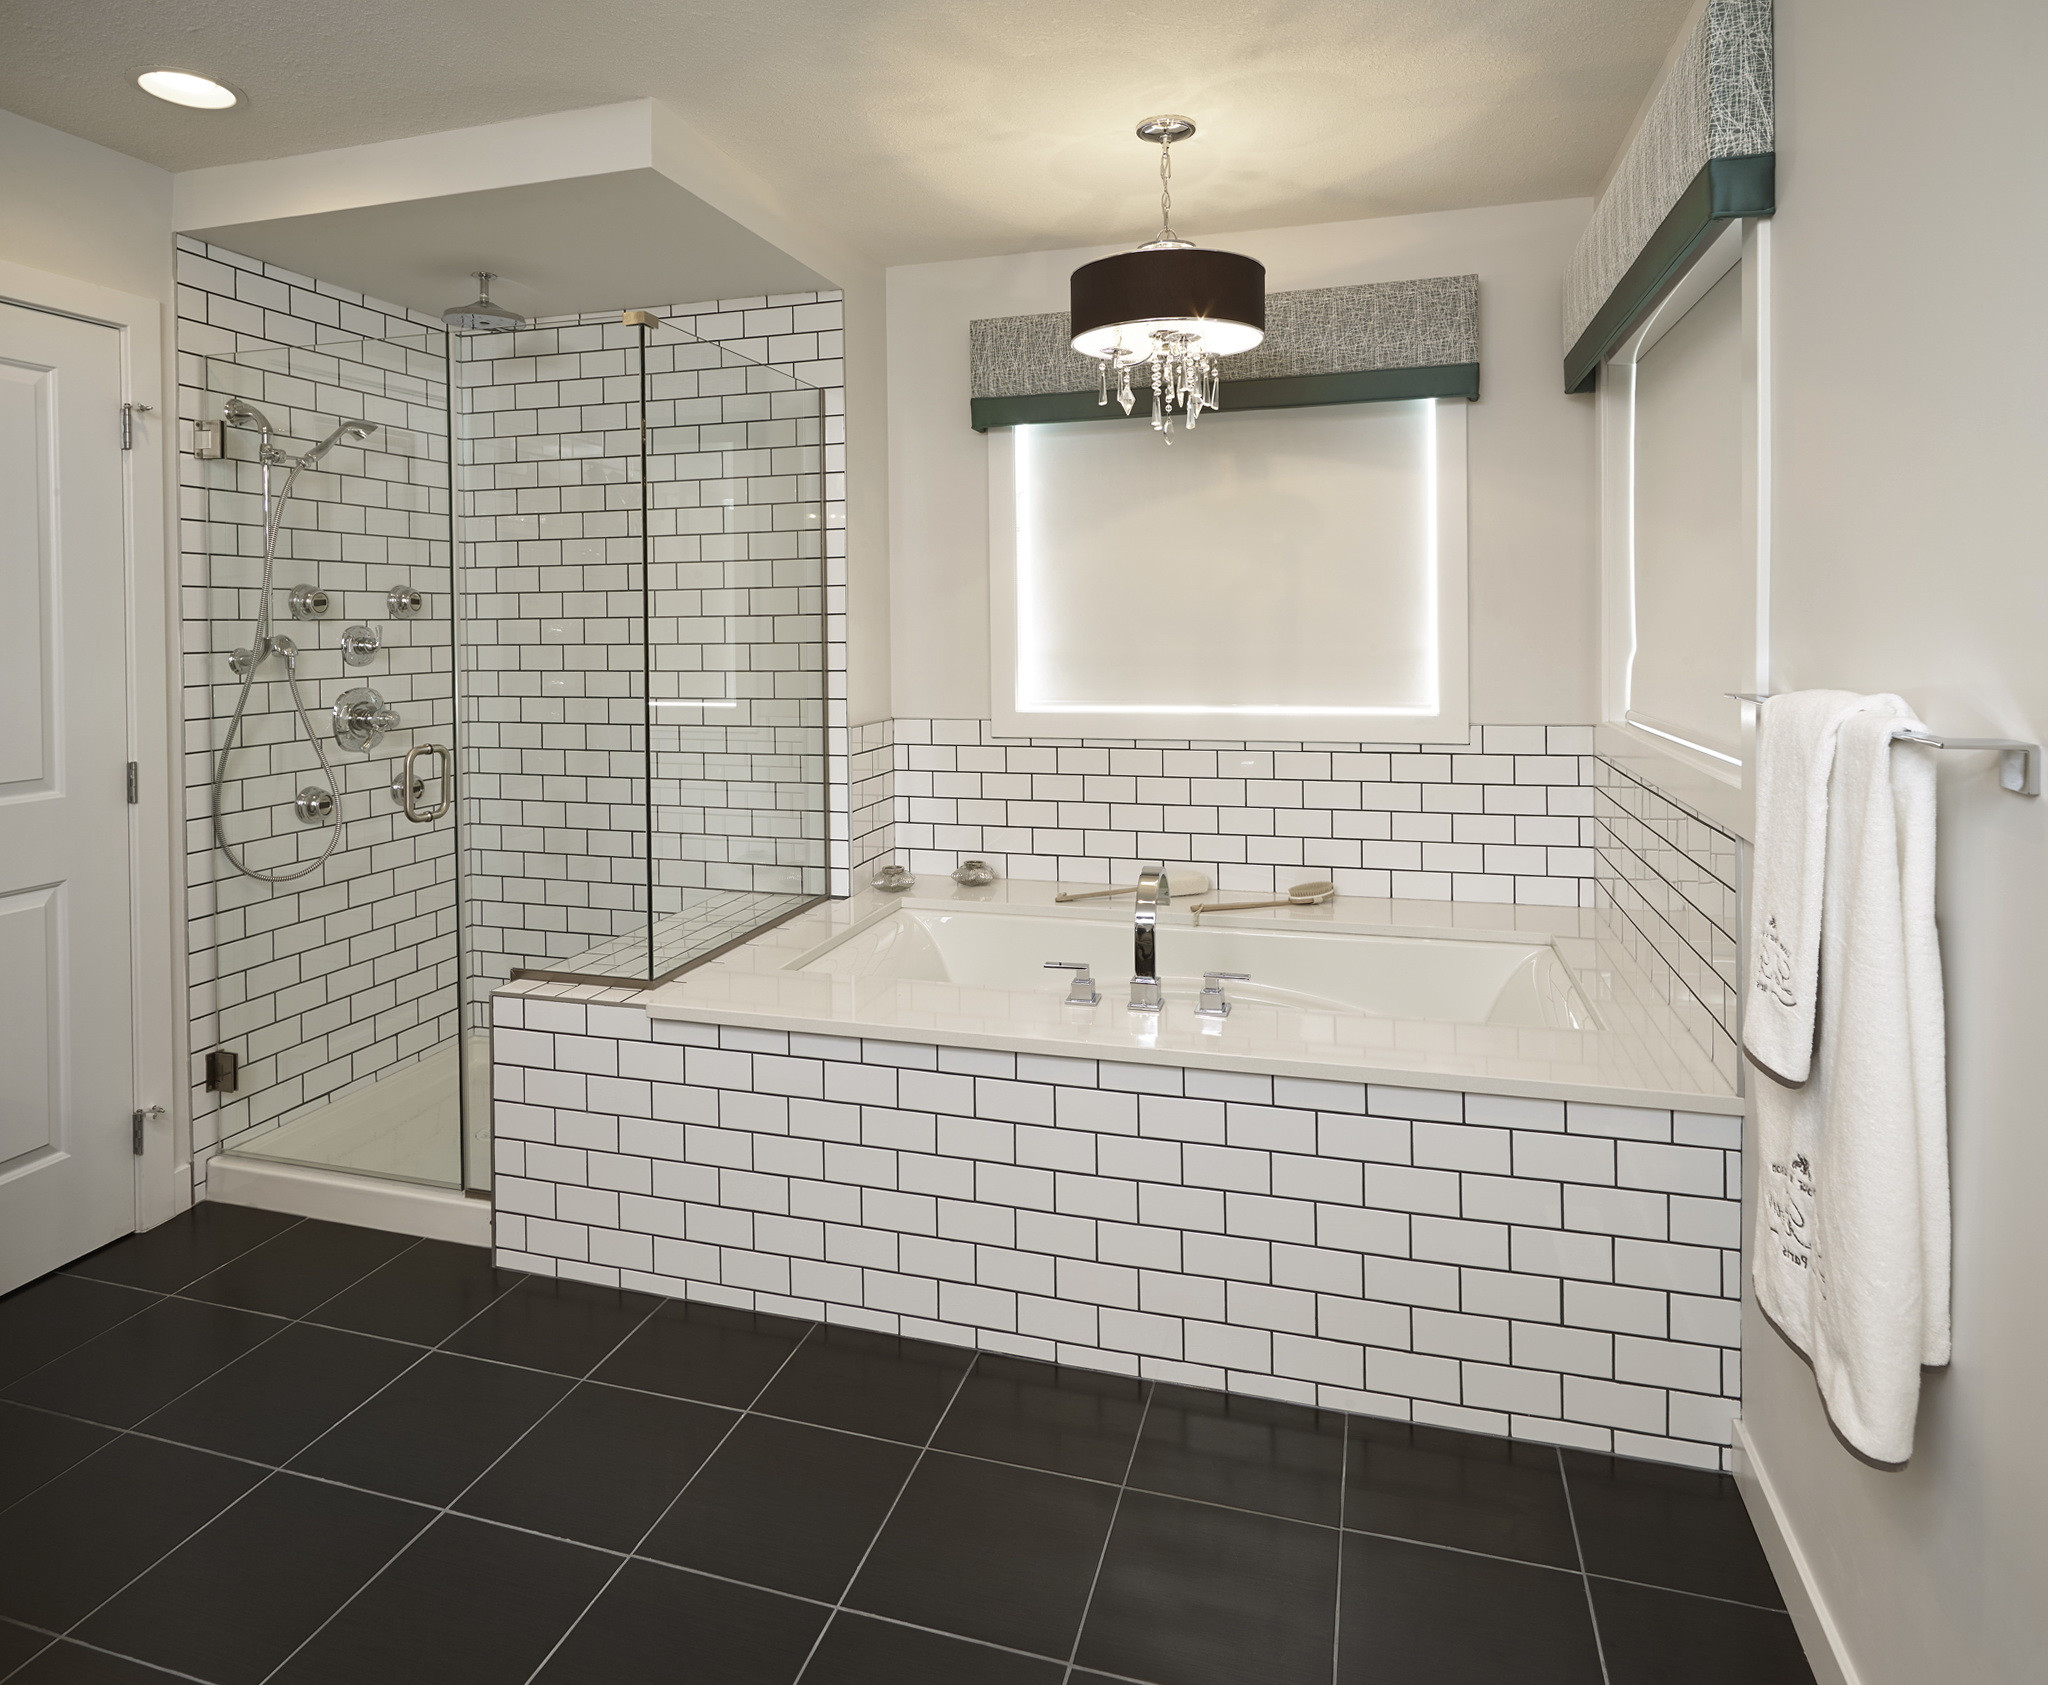 Home Depot Bathroom Shower Tile
 Bathroom Subway Tile Bathrooms For Your Dream Shower And